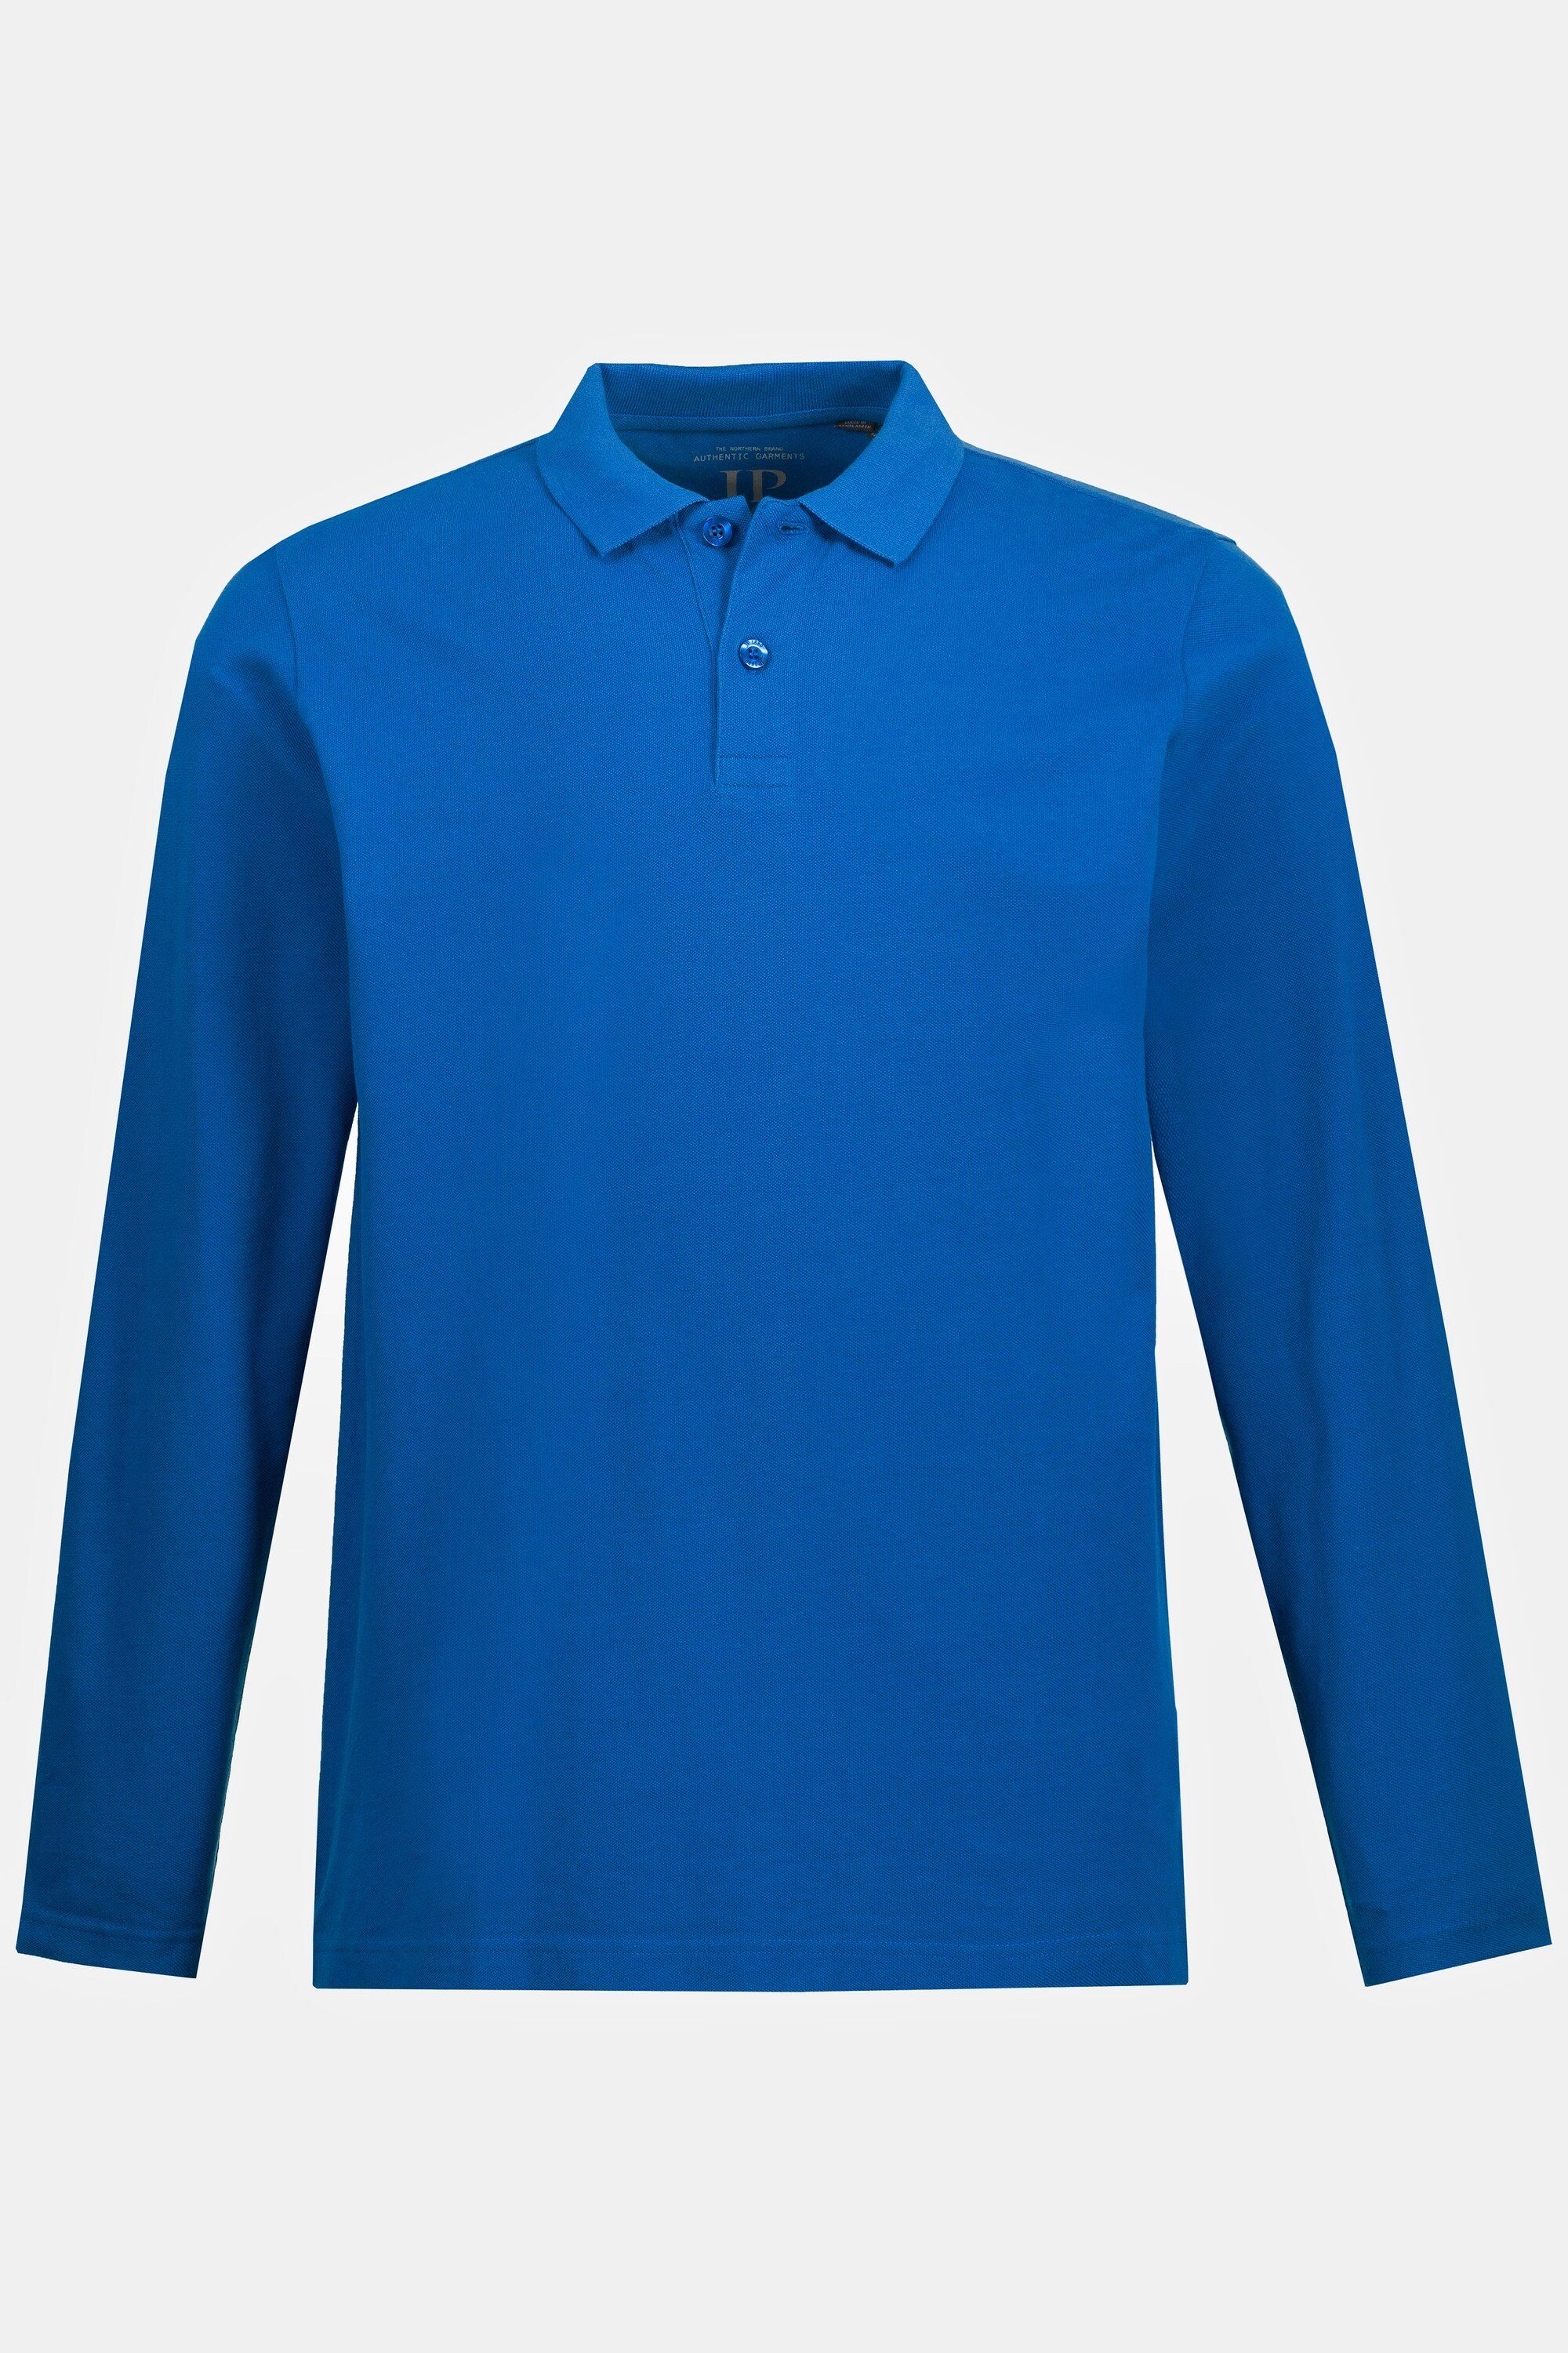 JP1880 8 Poloshirt Poloshirt blau XL Langarm Basic Piqué bis